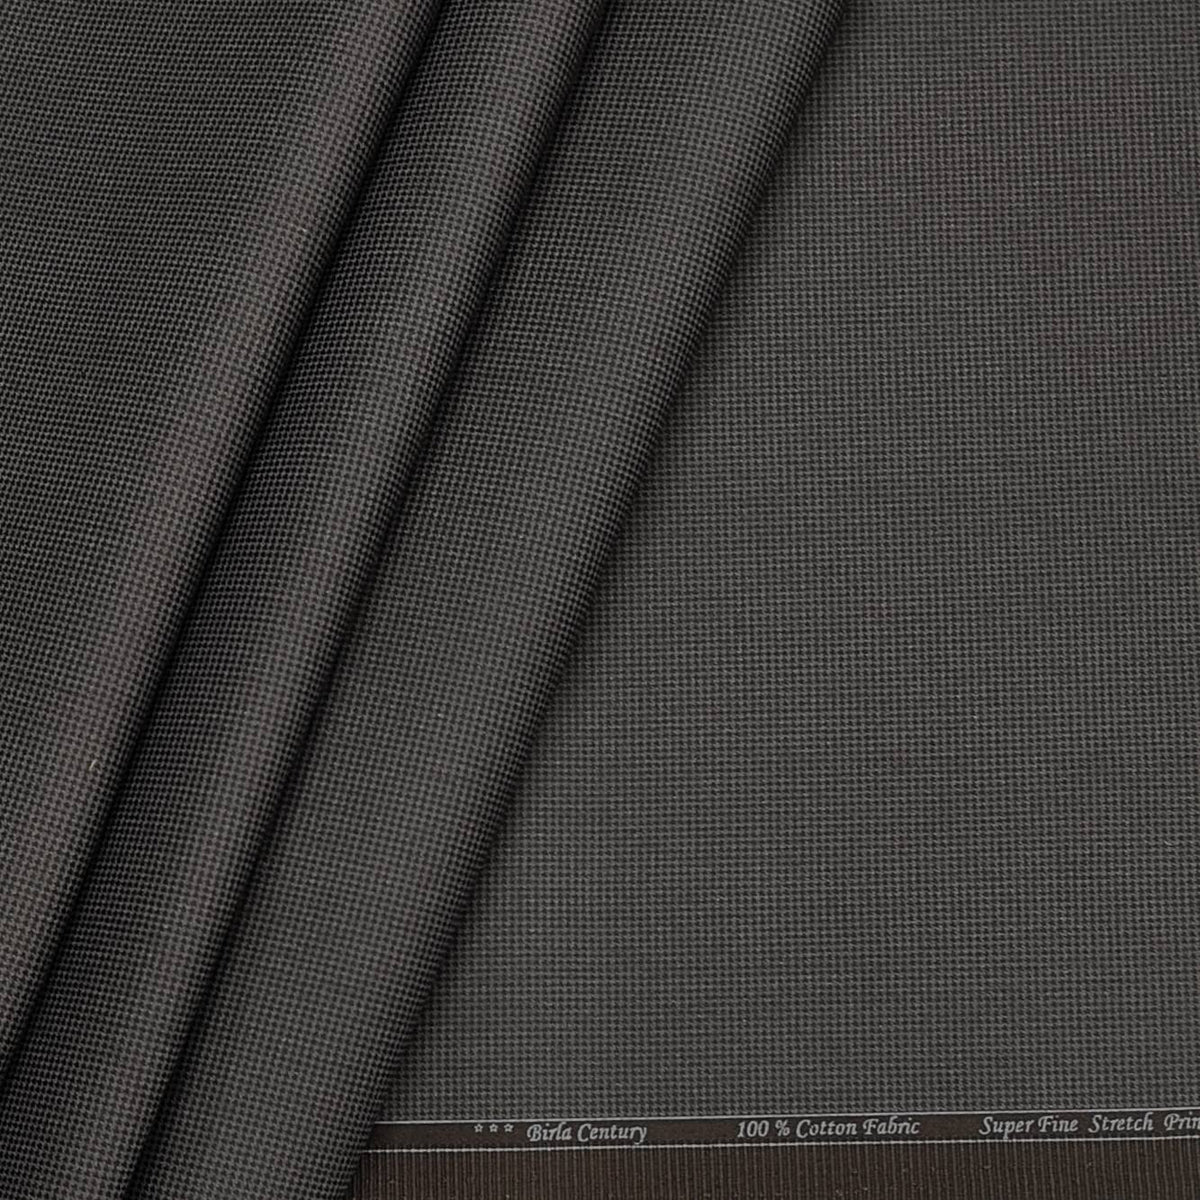 Birla Century Men's 100% cotton Stretchable Printed Trouser Fabric (brown)